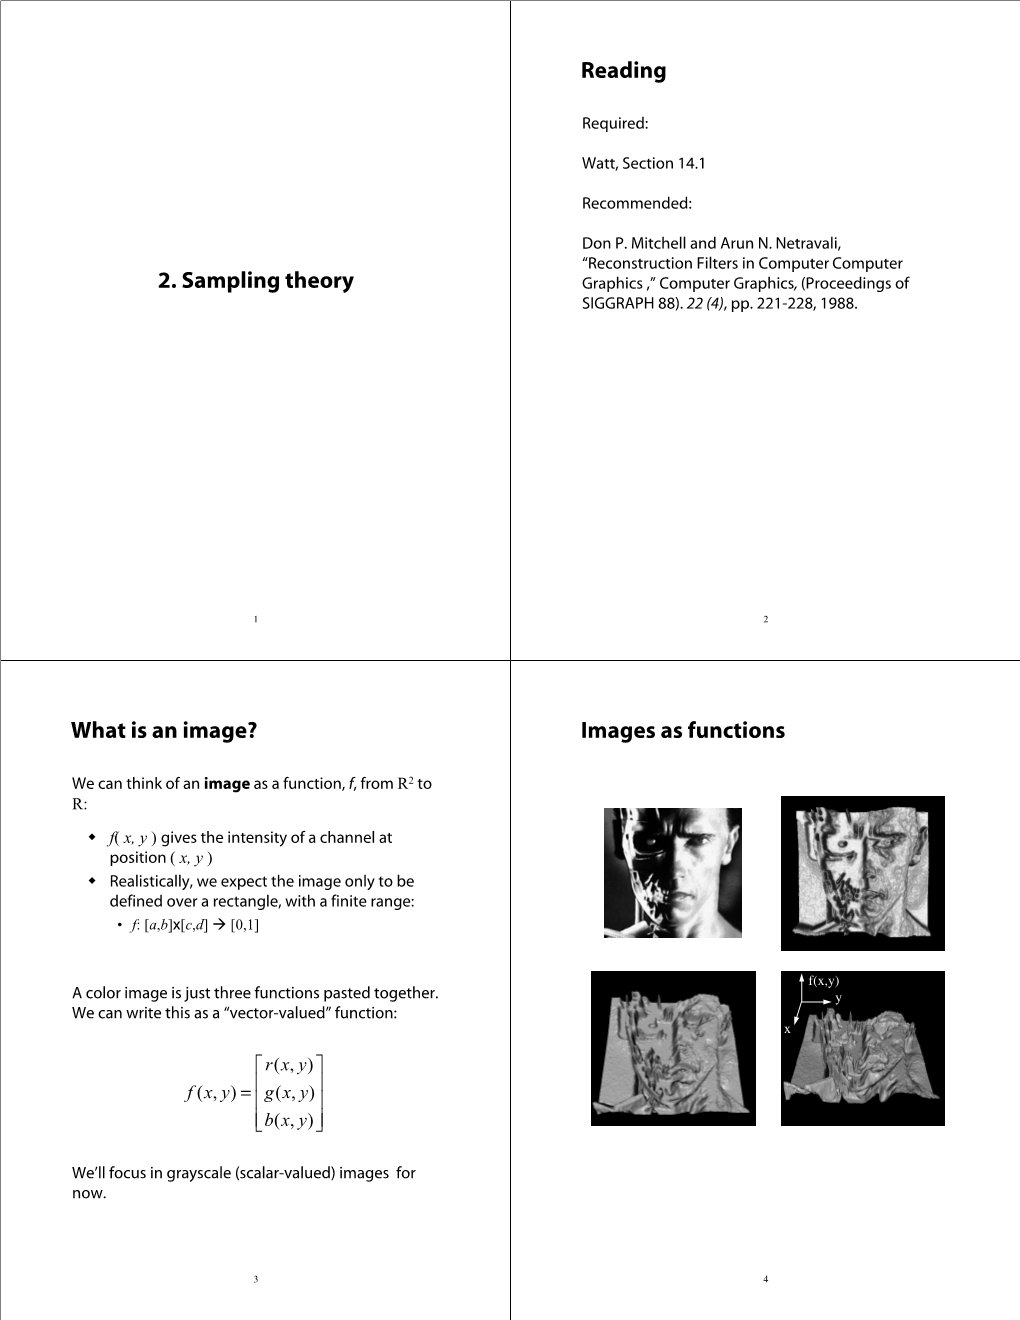 Sampling Theory Graphics ,” Computer Graphics, (Proceedings of SIGGRAPH 88)